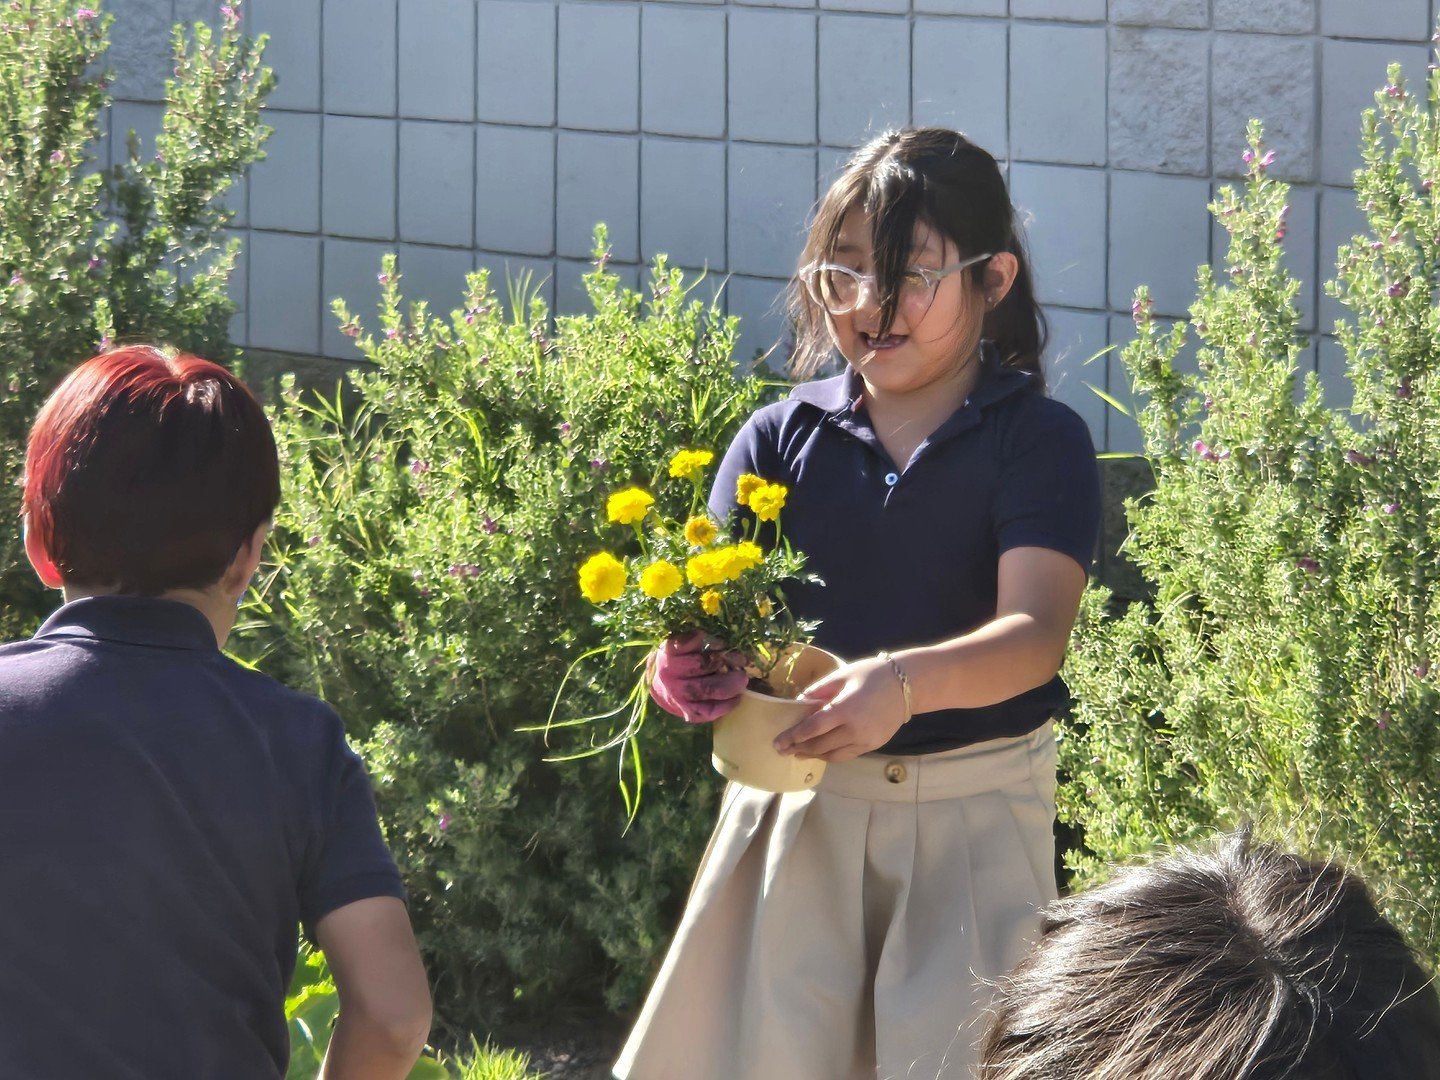 Harvest day is always a joy for the kids in the Palomino Neighborhood. #HarvestDay #Zuchinni #Marygolds #MentorKidsUSA #PalominoNeighborhood